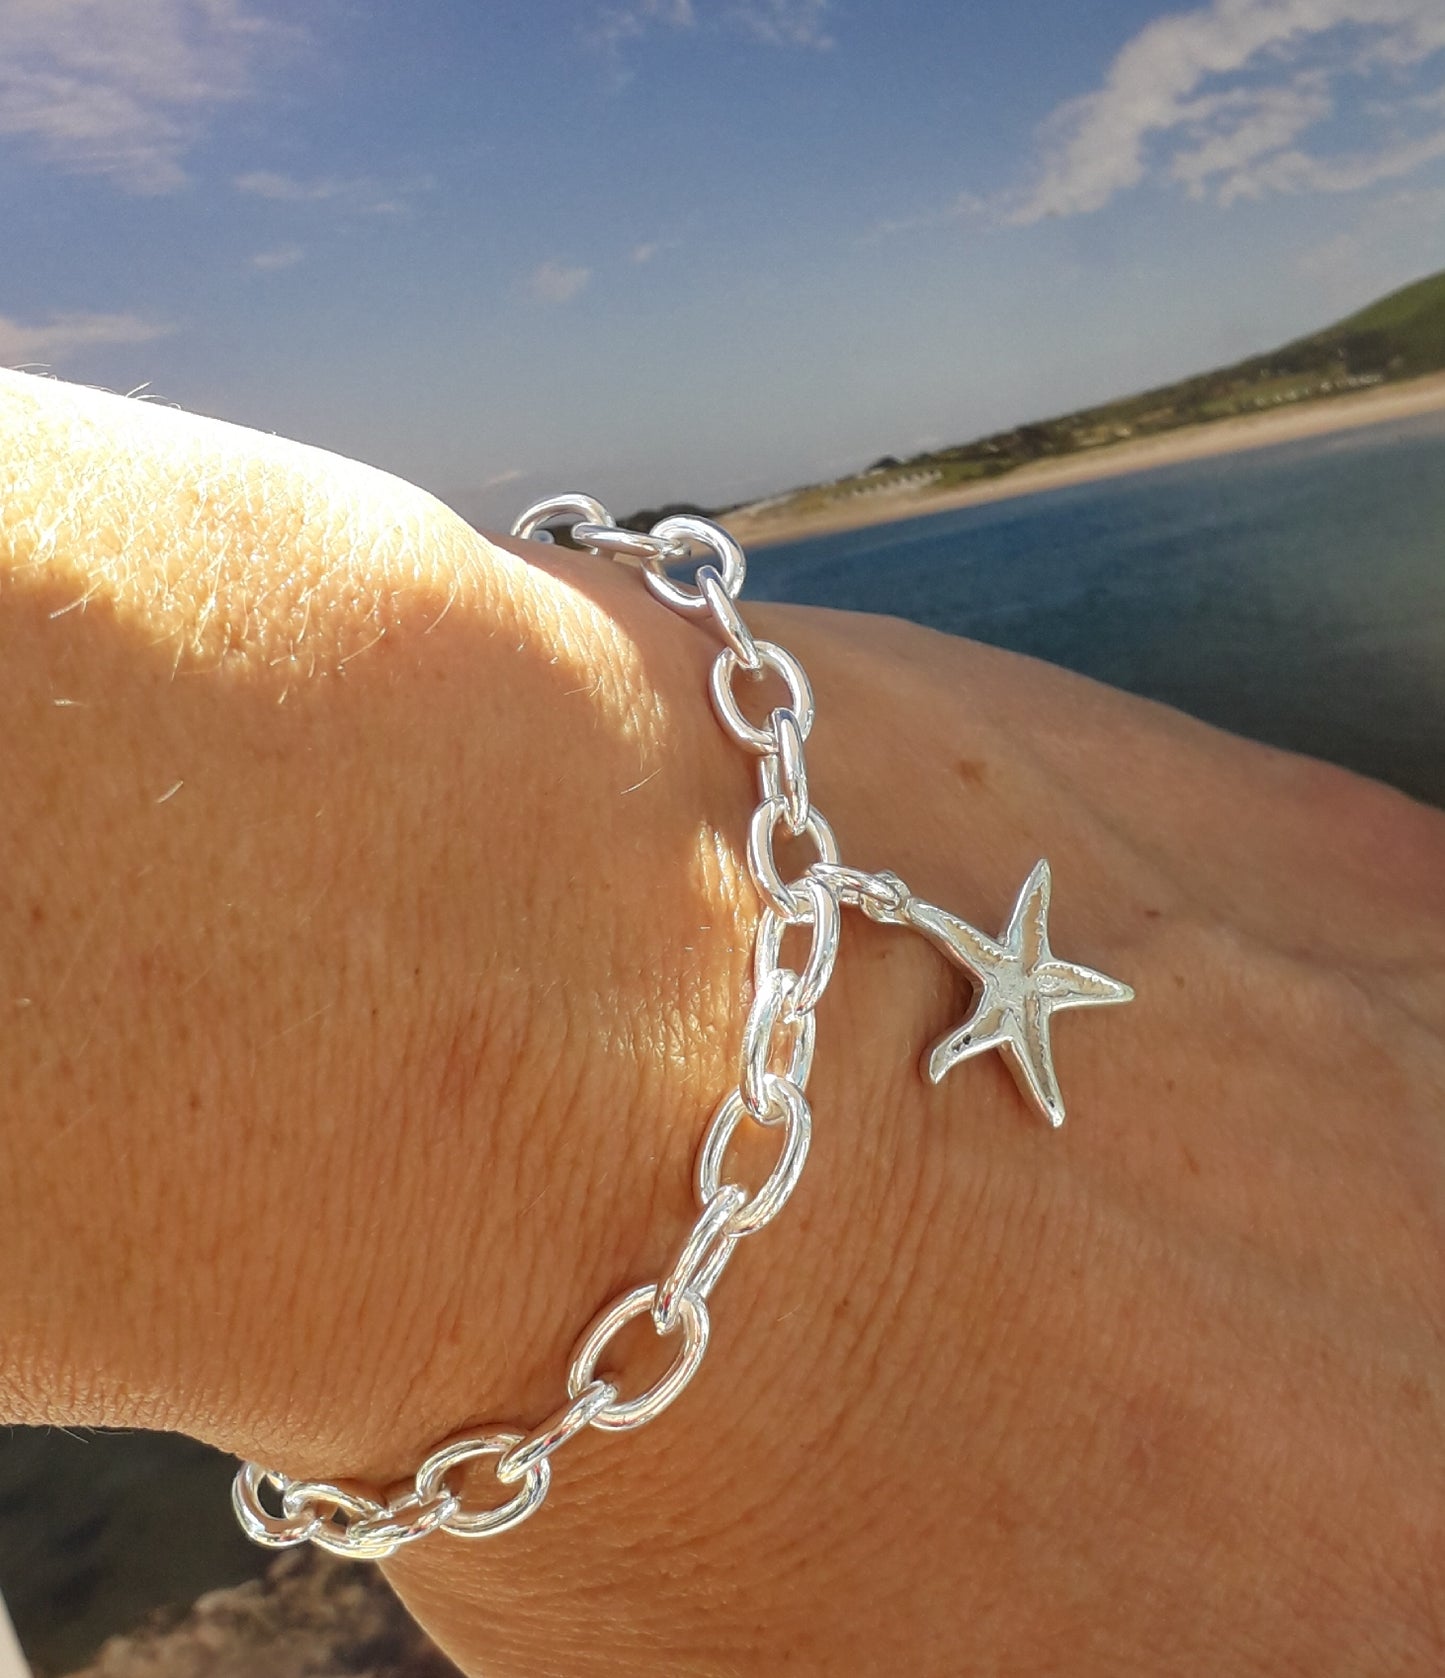 Silver charm bracelet with starfish